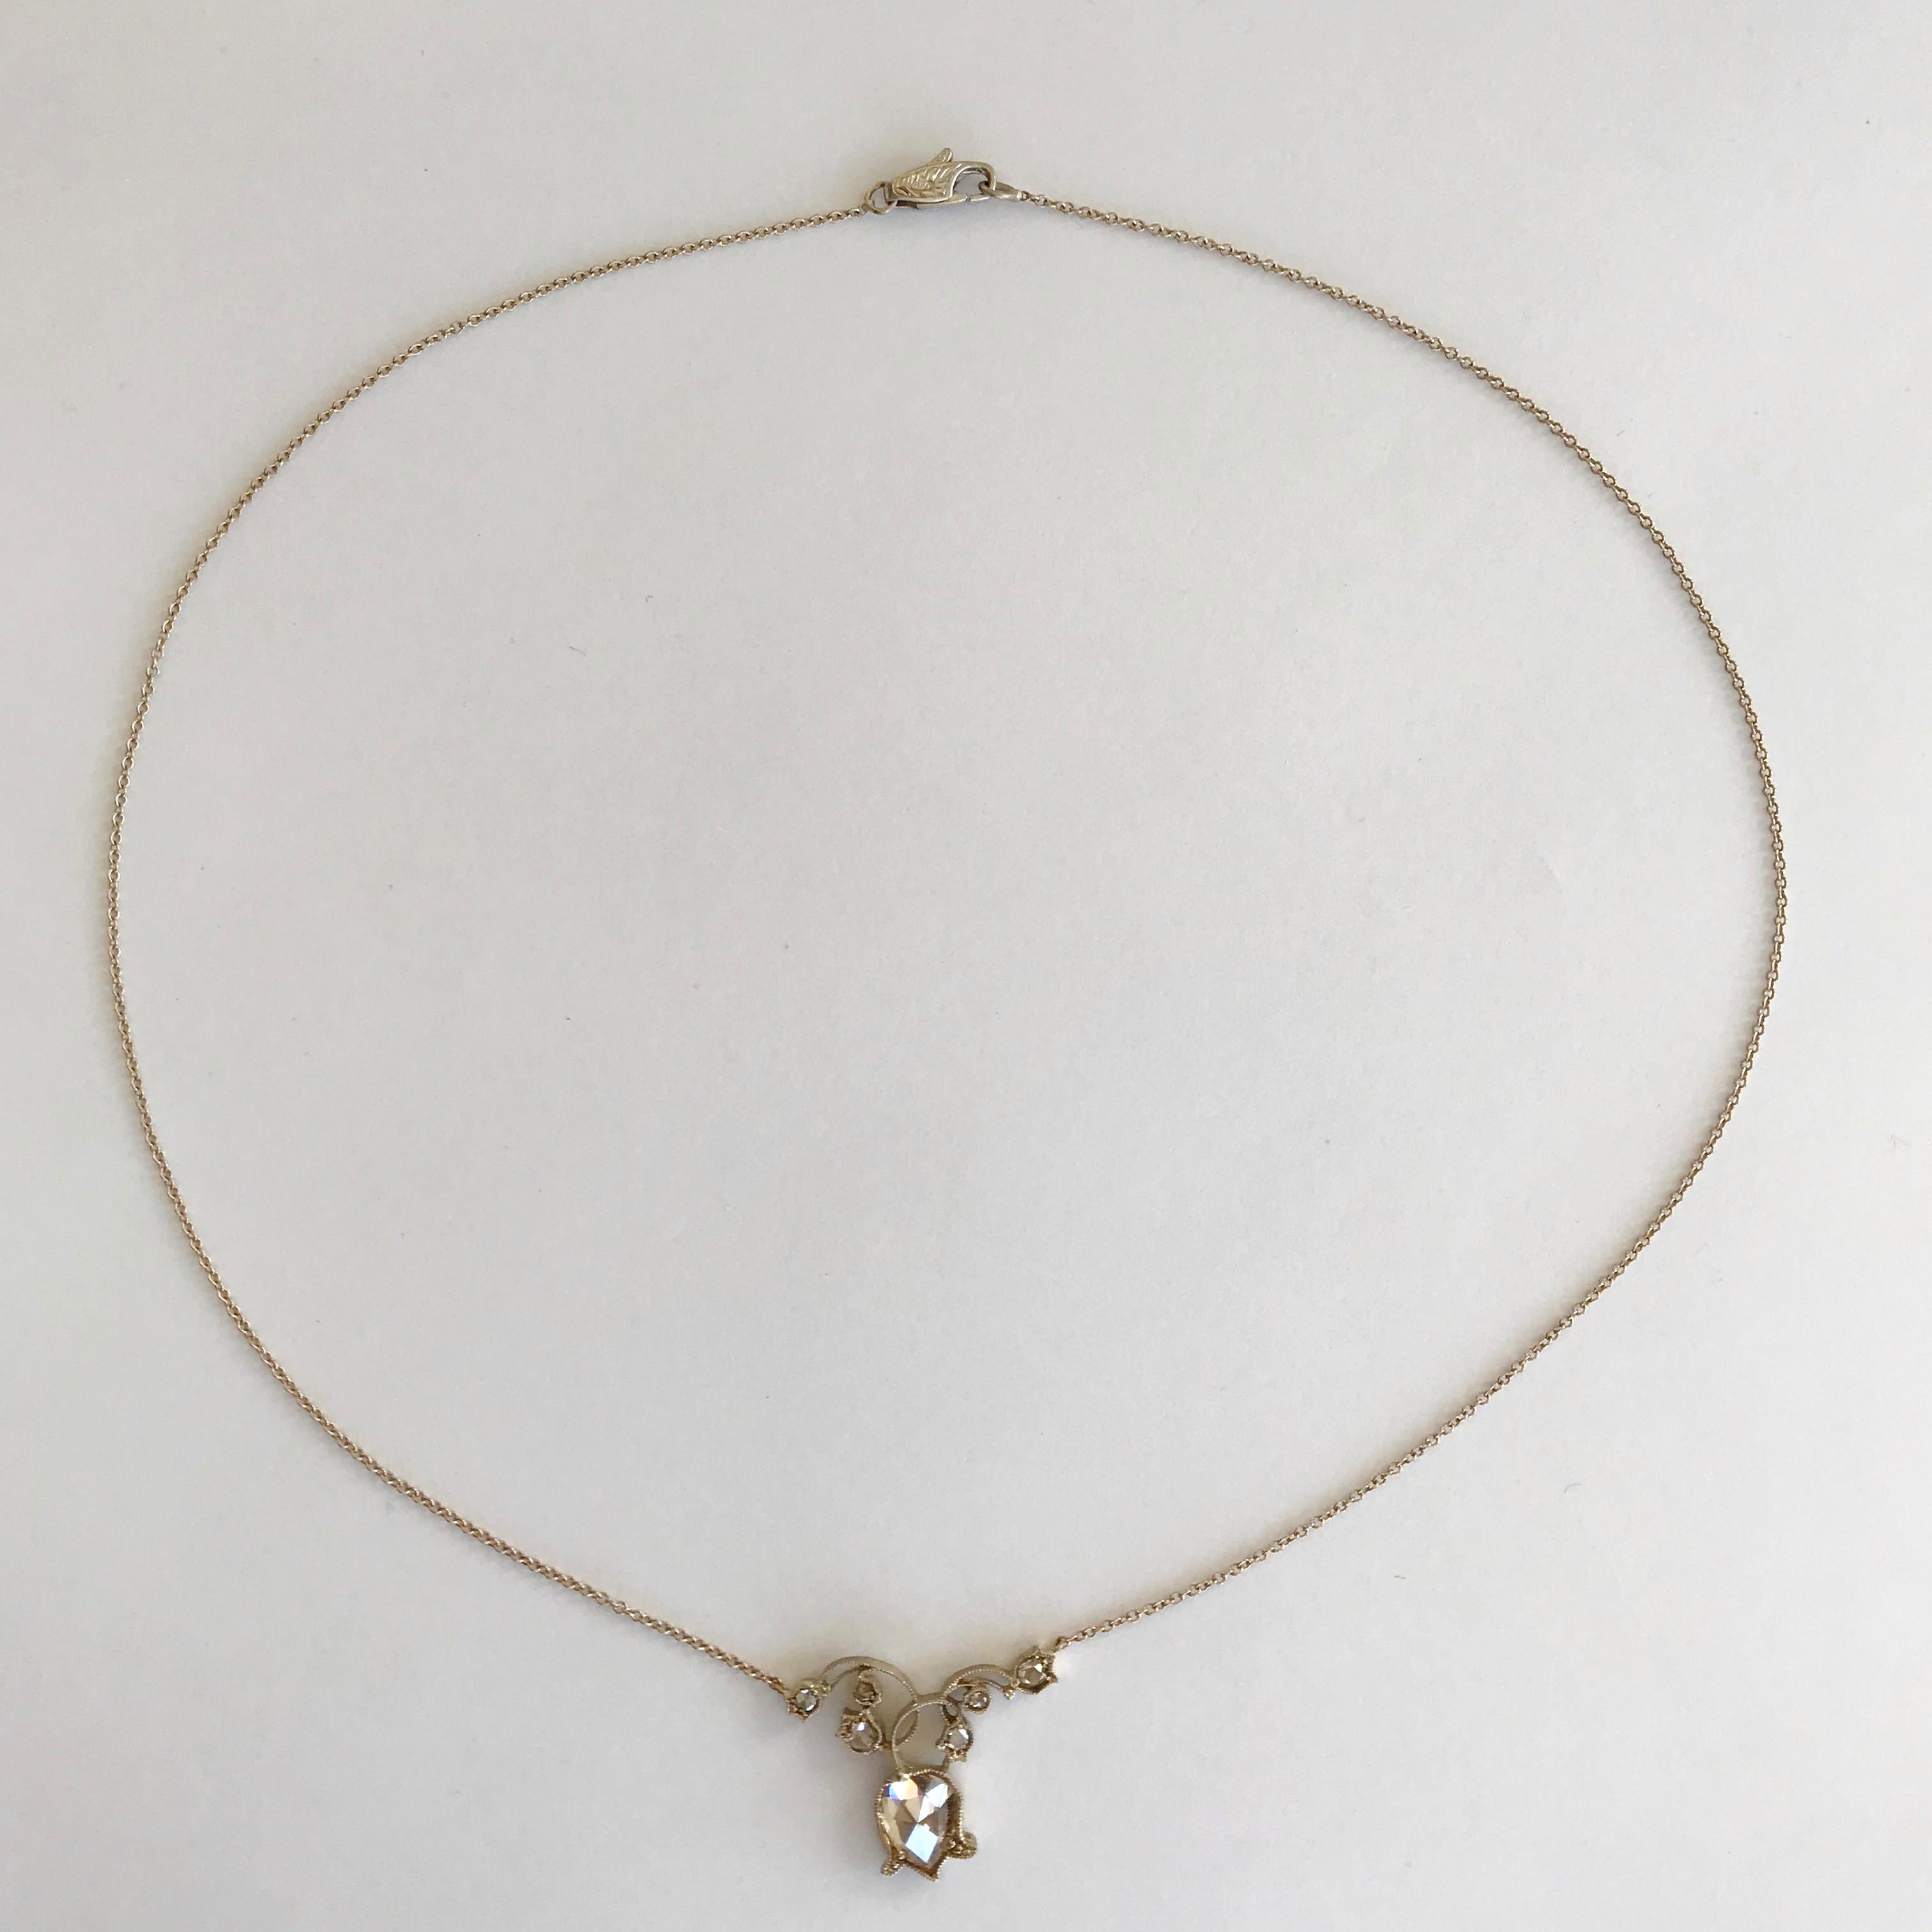 Dalben 1.5 Carat Pear Shape Diamond White Gold Necklace For Sale 2